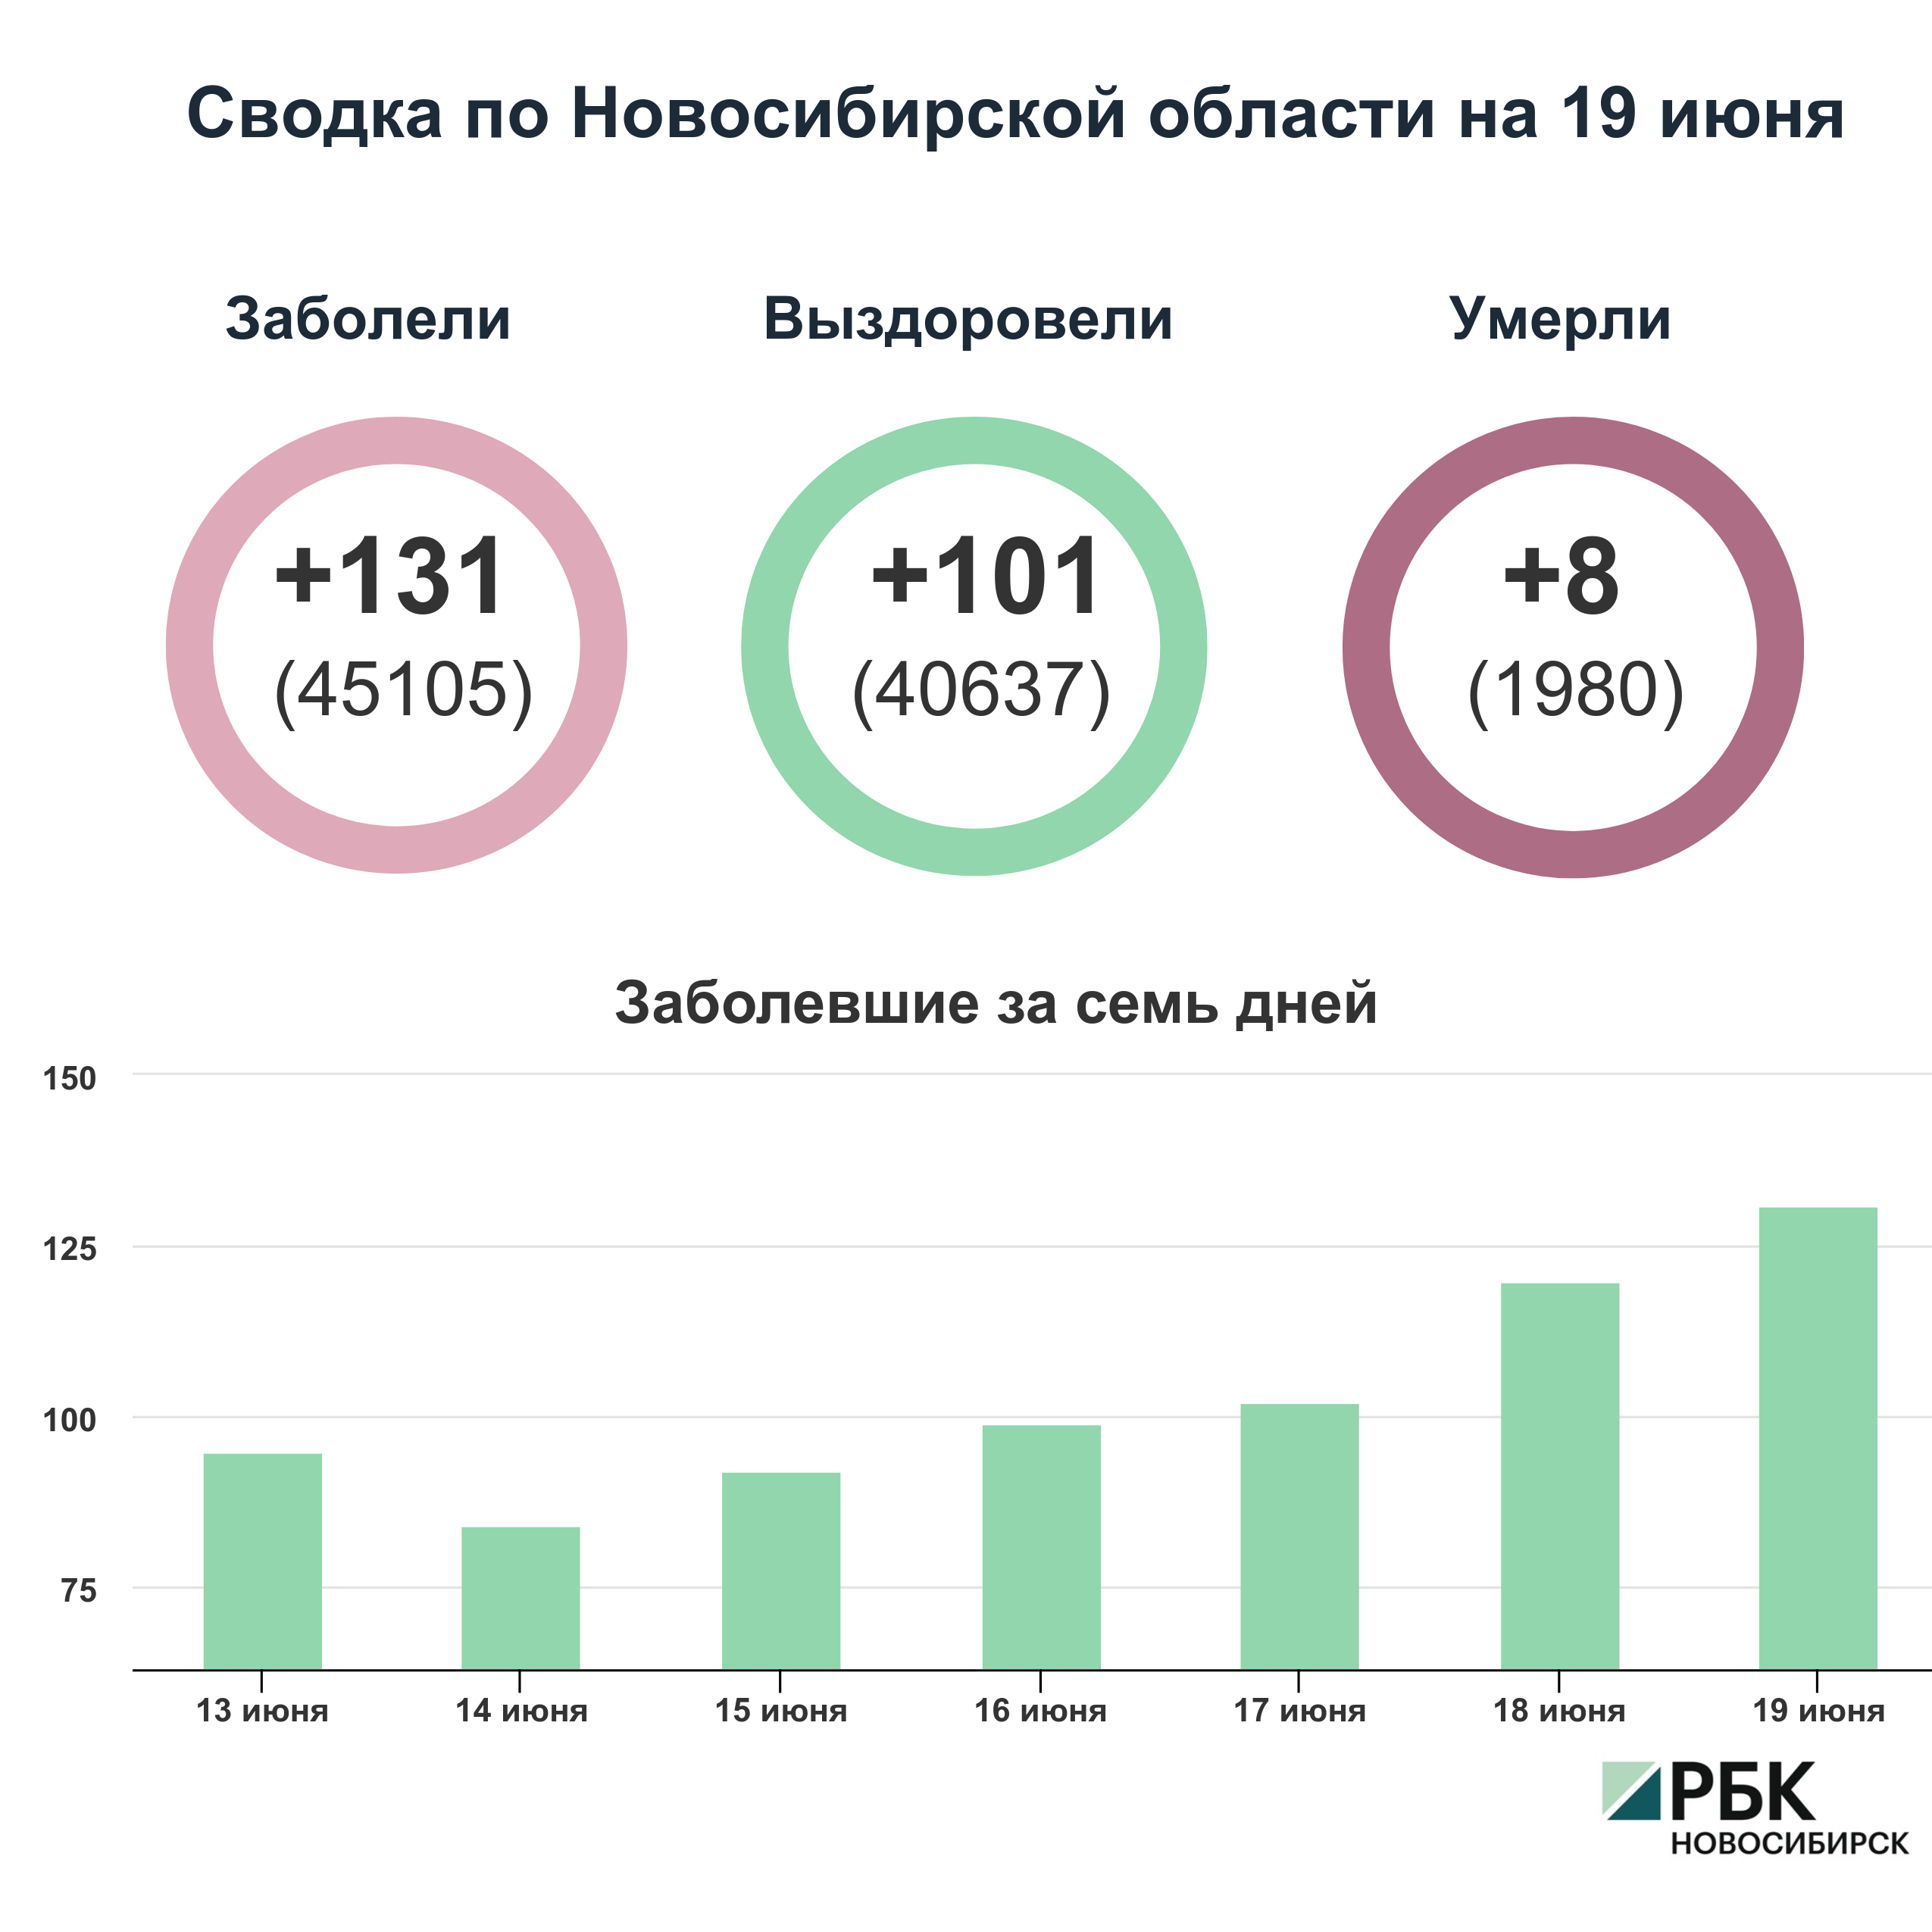 Коронавирус в Новосибирске: сводка на 19 июня